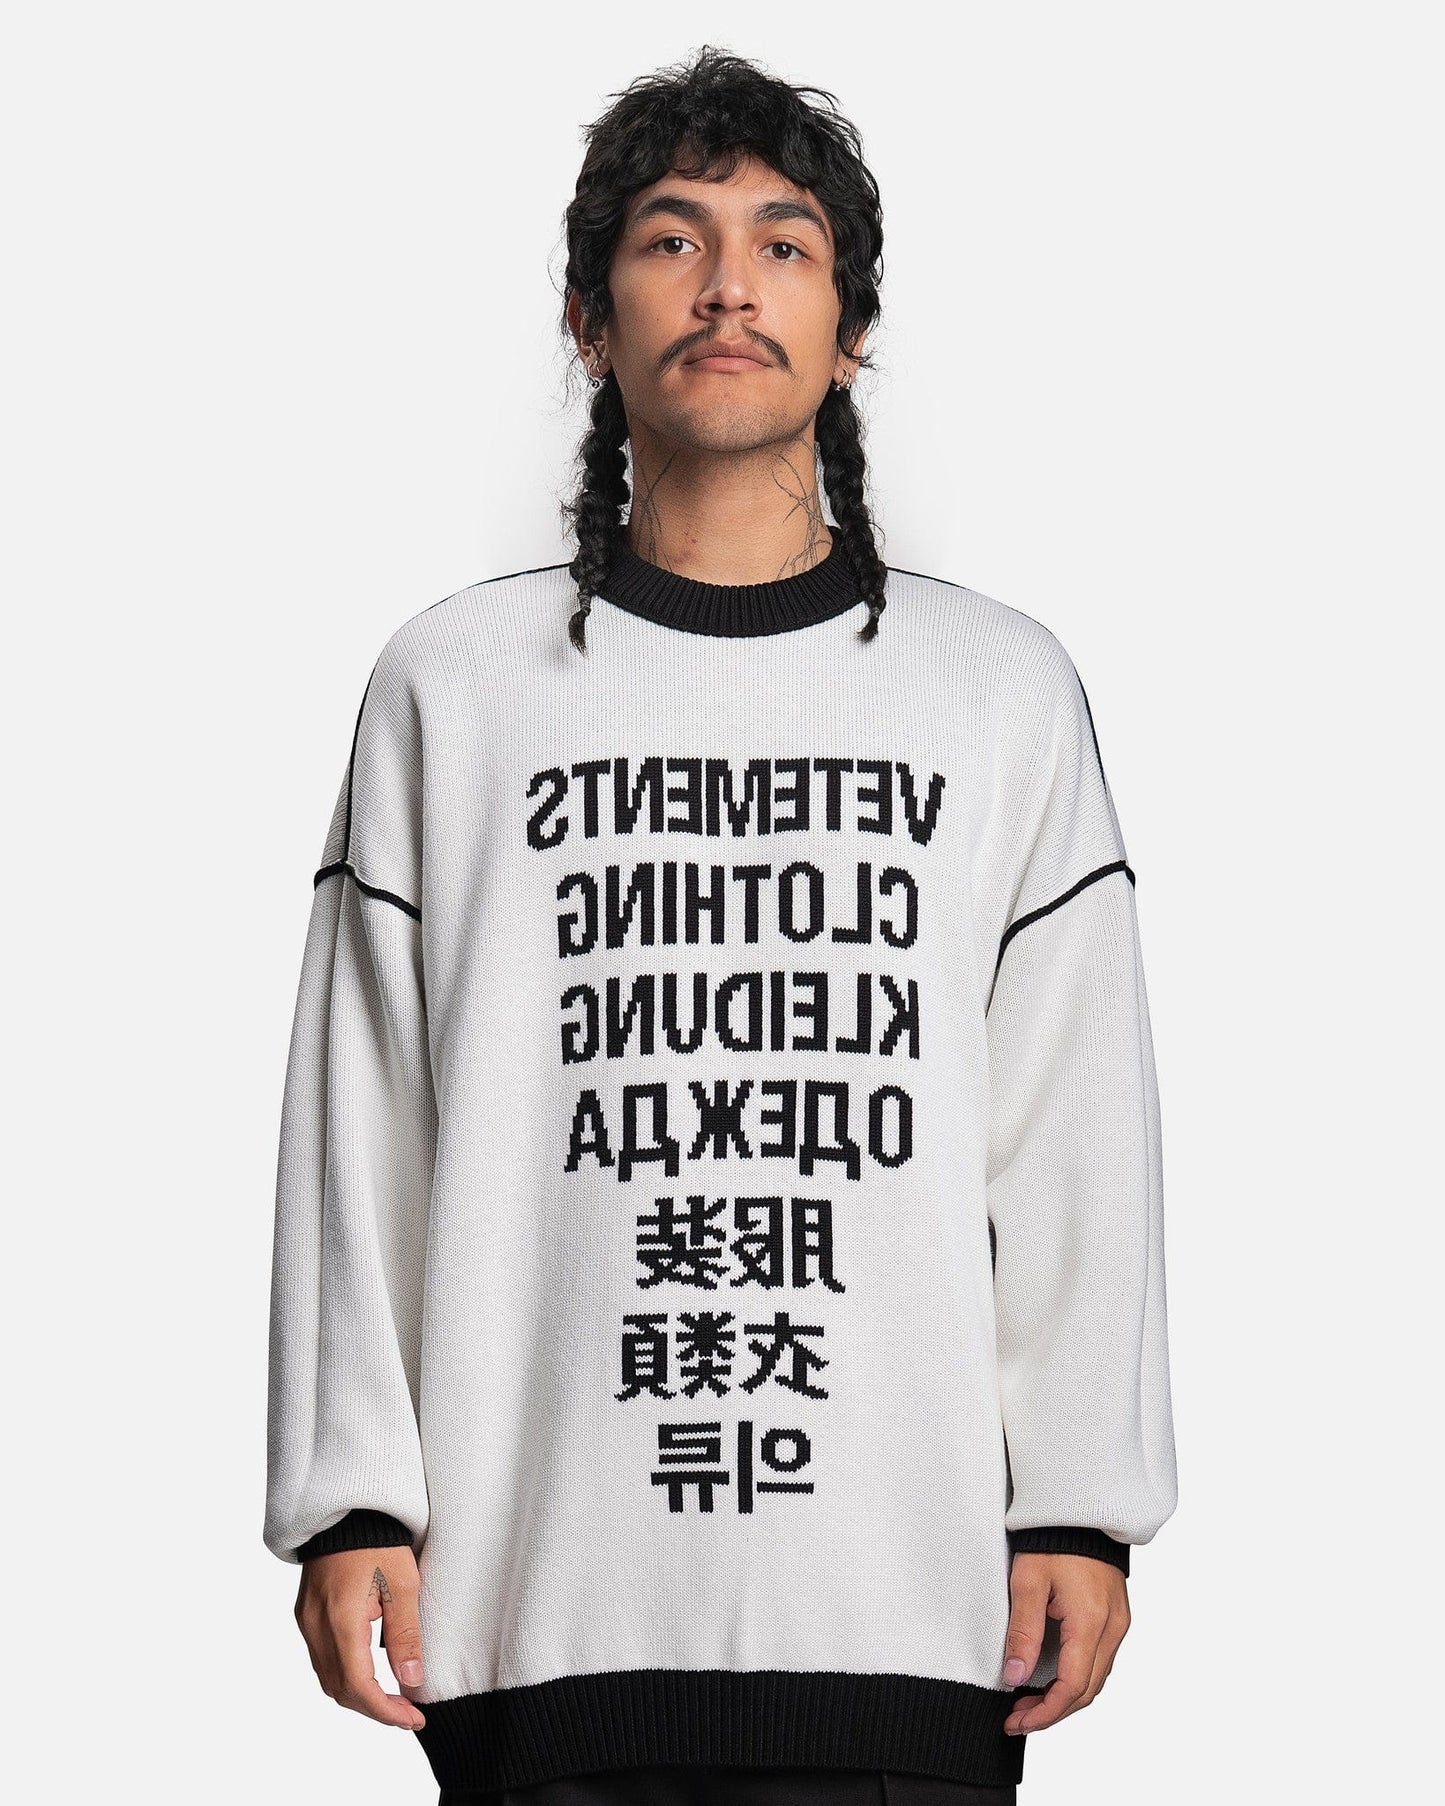 VETEMENTS Translation Sweater in Black